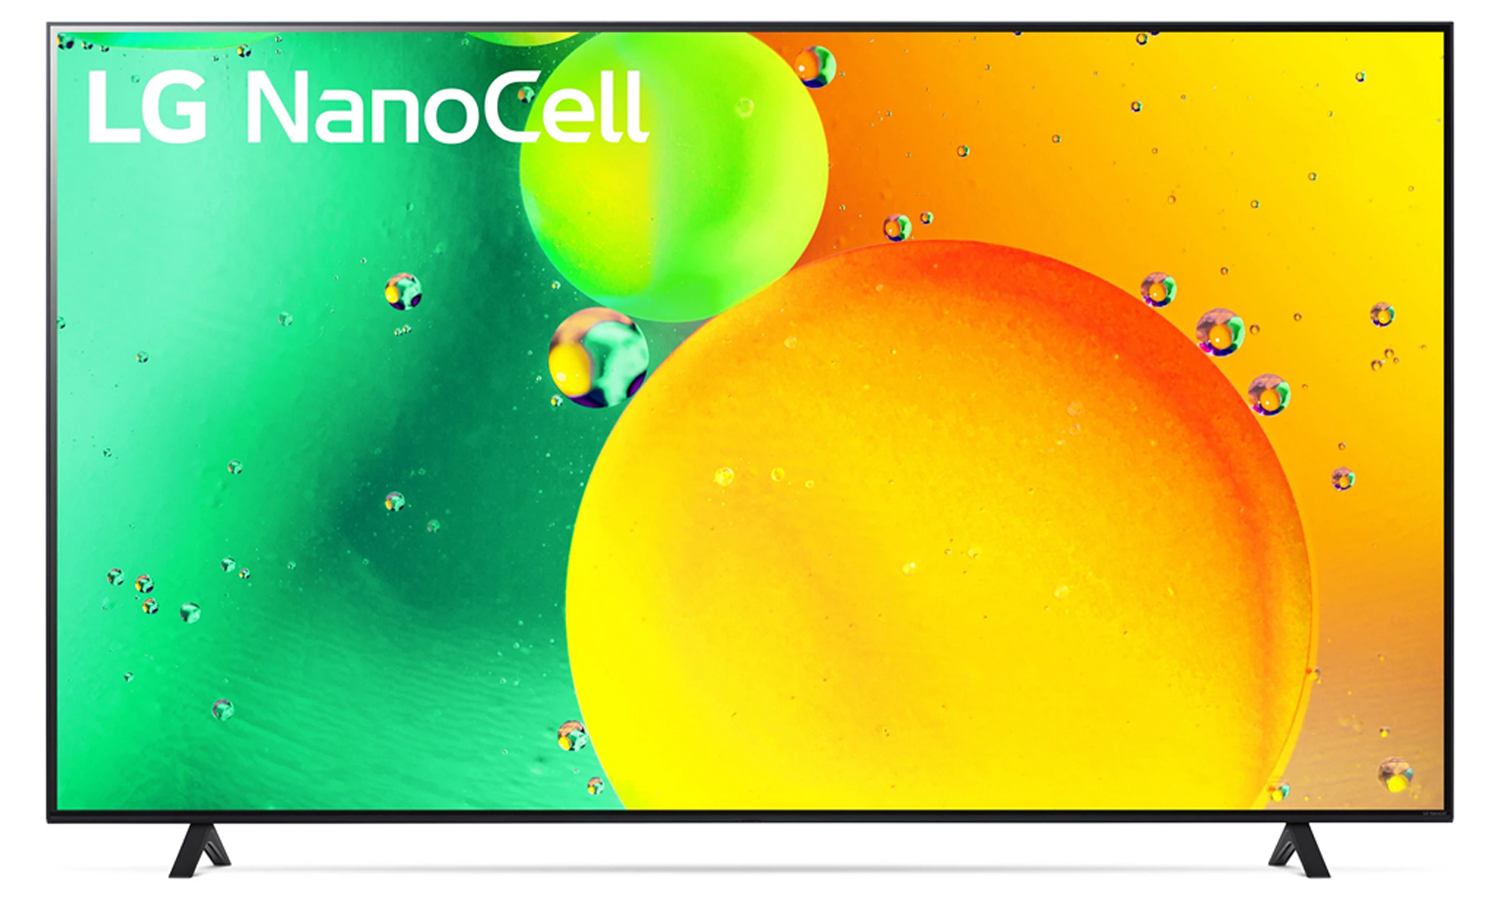 LG Nano Cell TVs